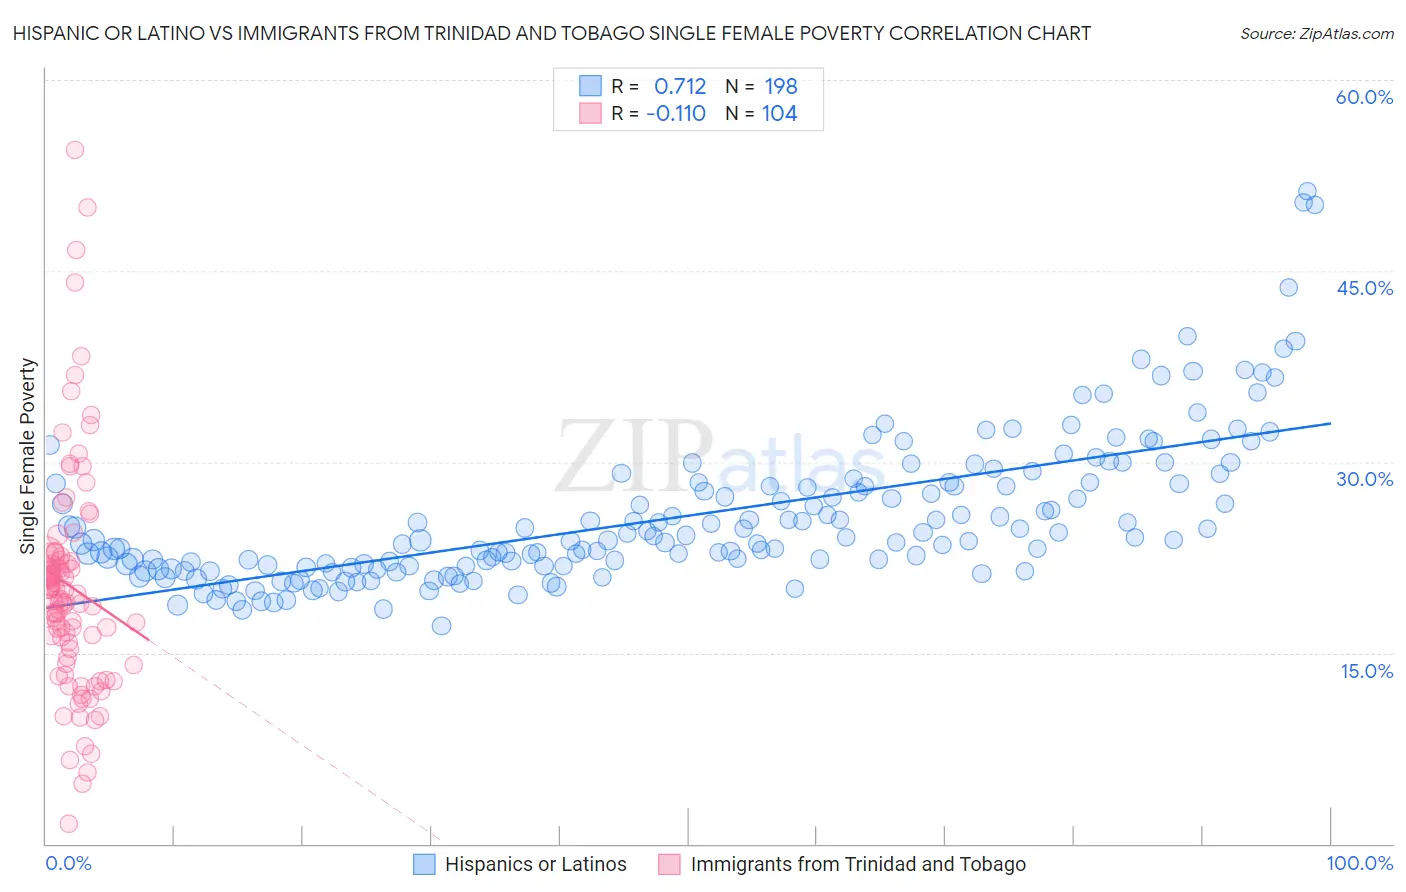 Hispanic or Latino vs Immigrants from Trinidad and Tobago Single Female Poverty